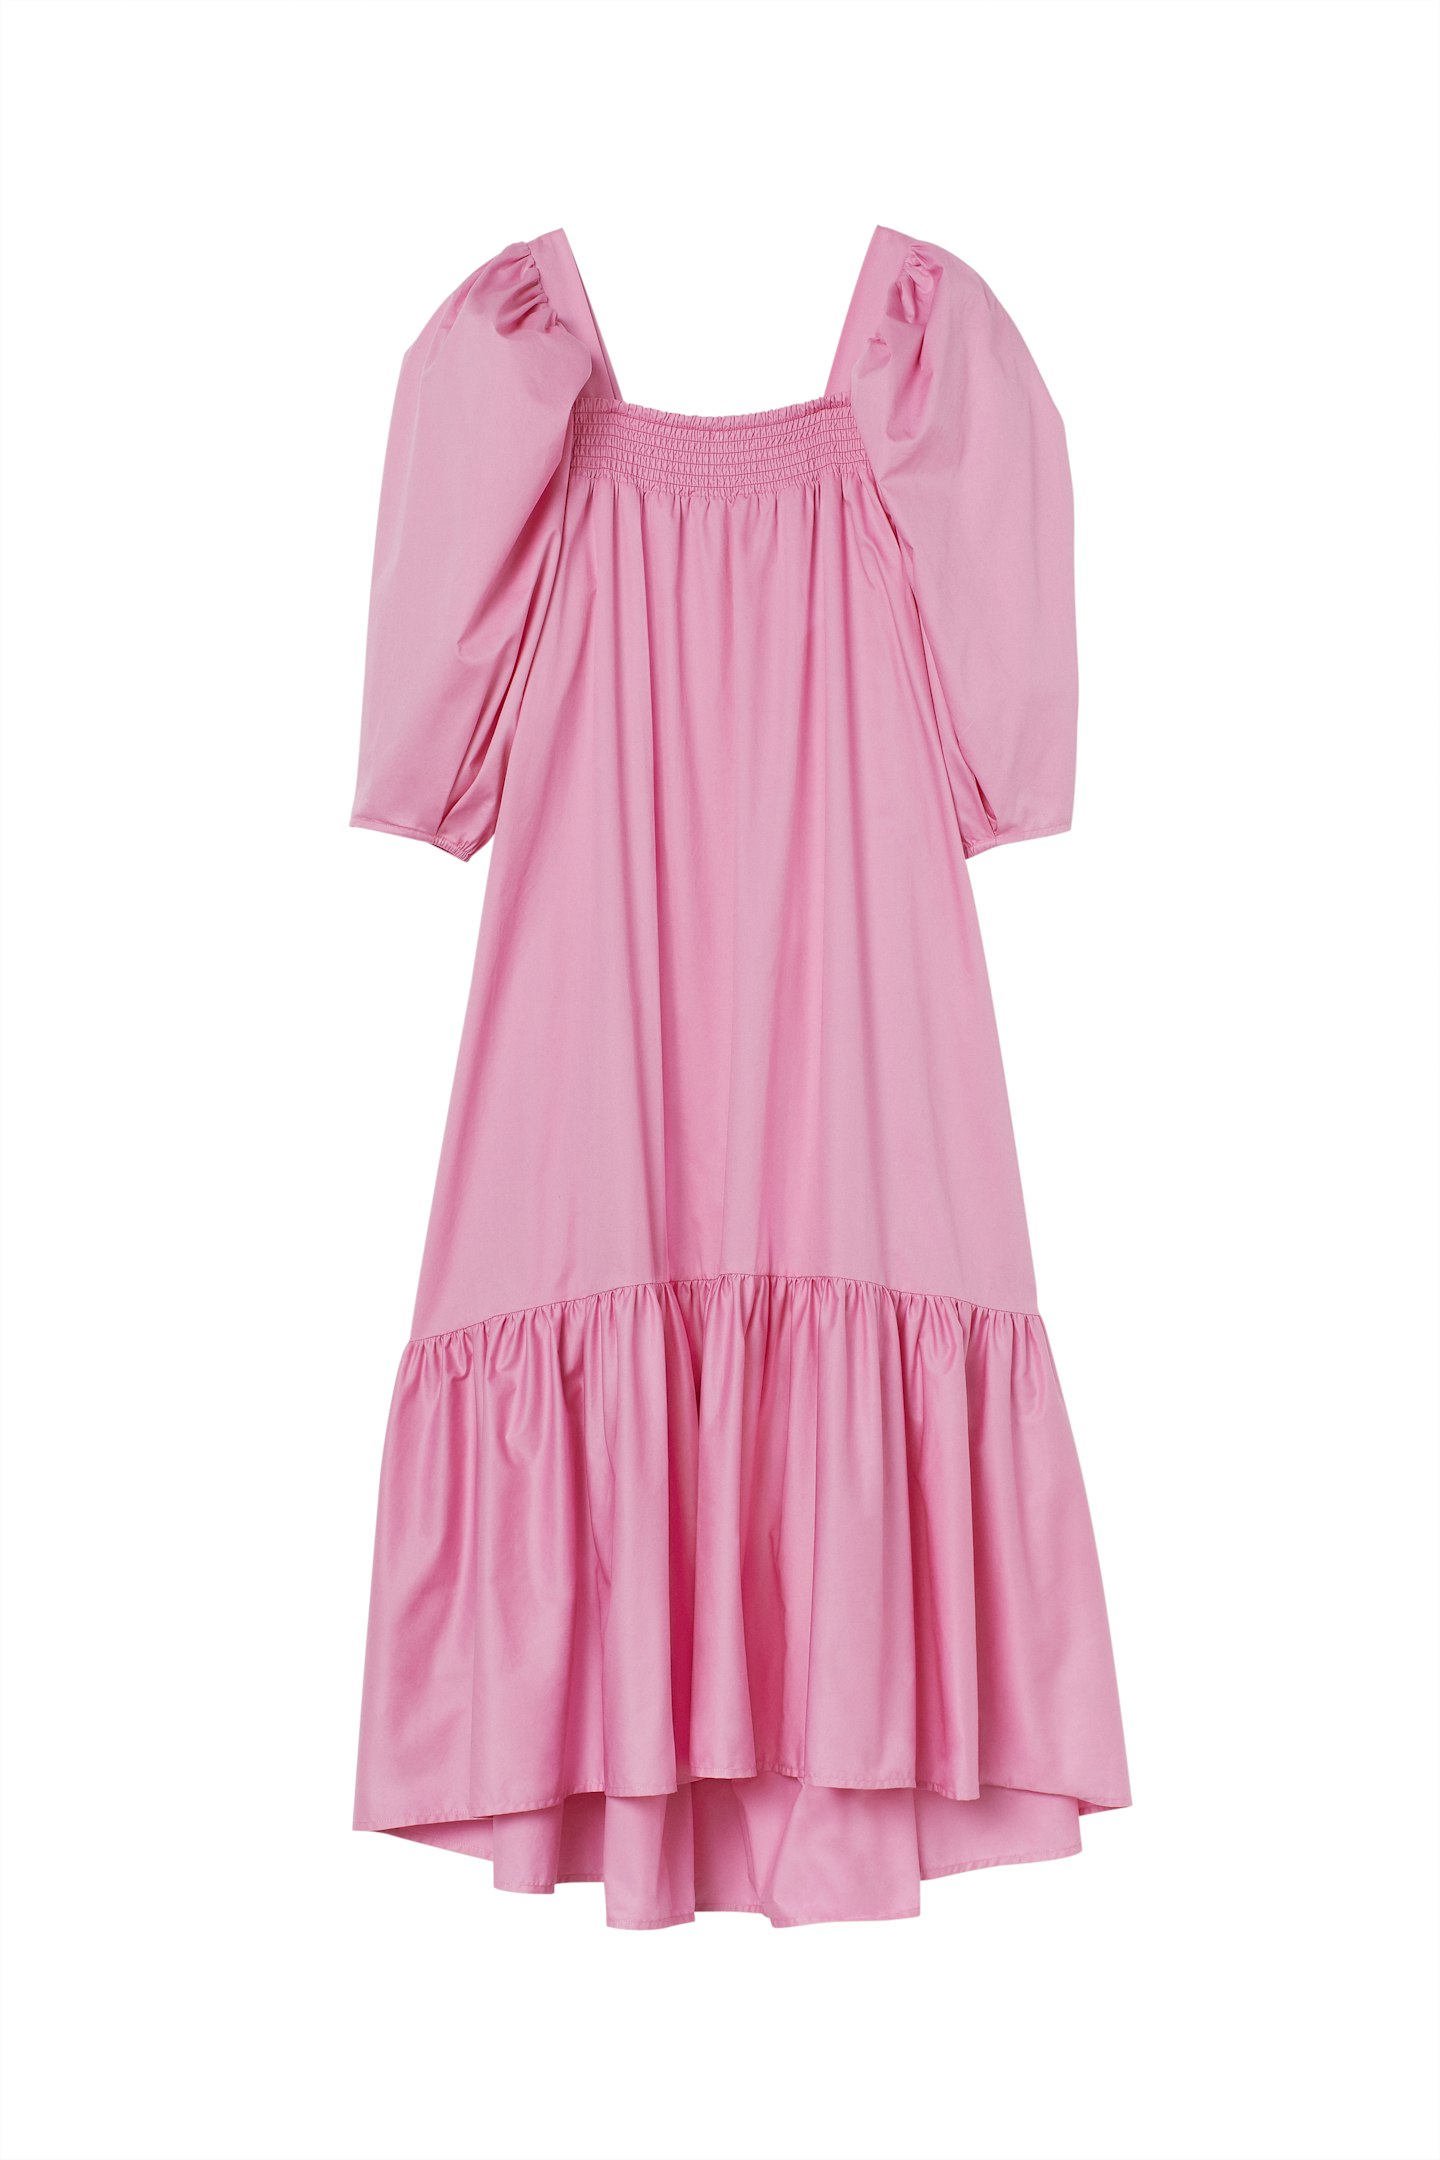 Pink Puff Sleeve Cotton Dress, £19.99